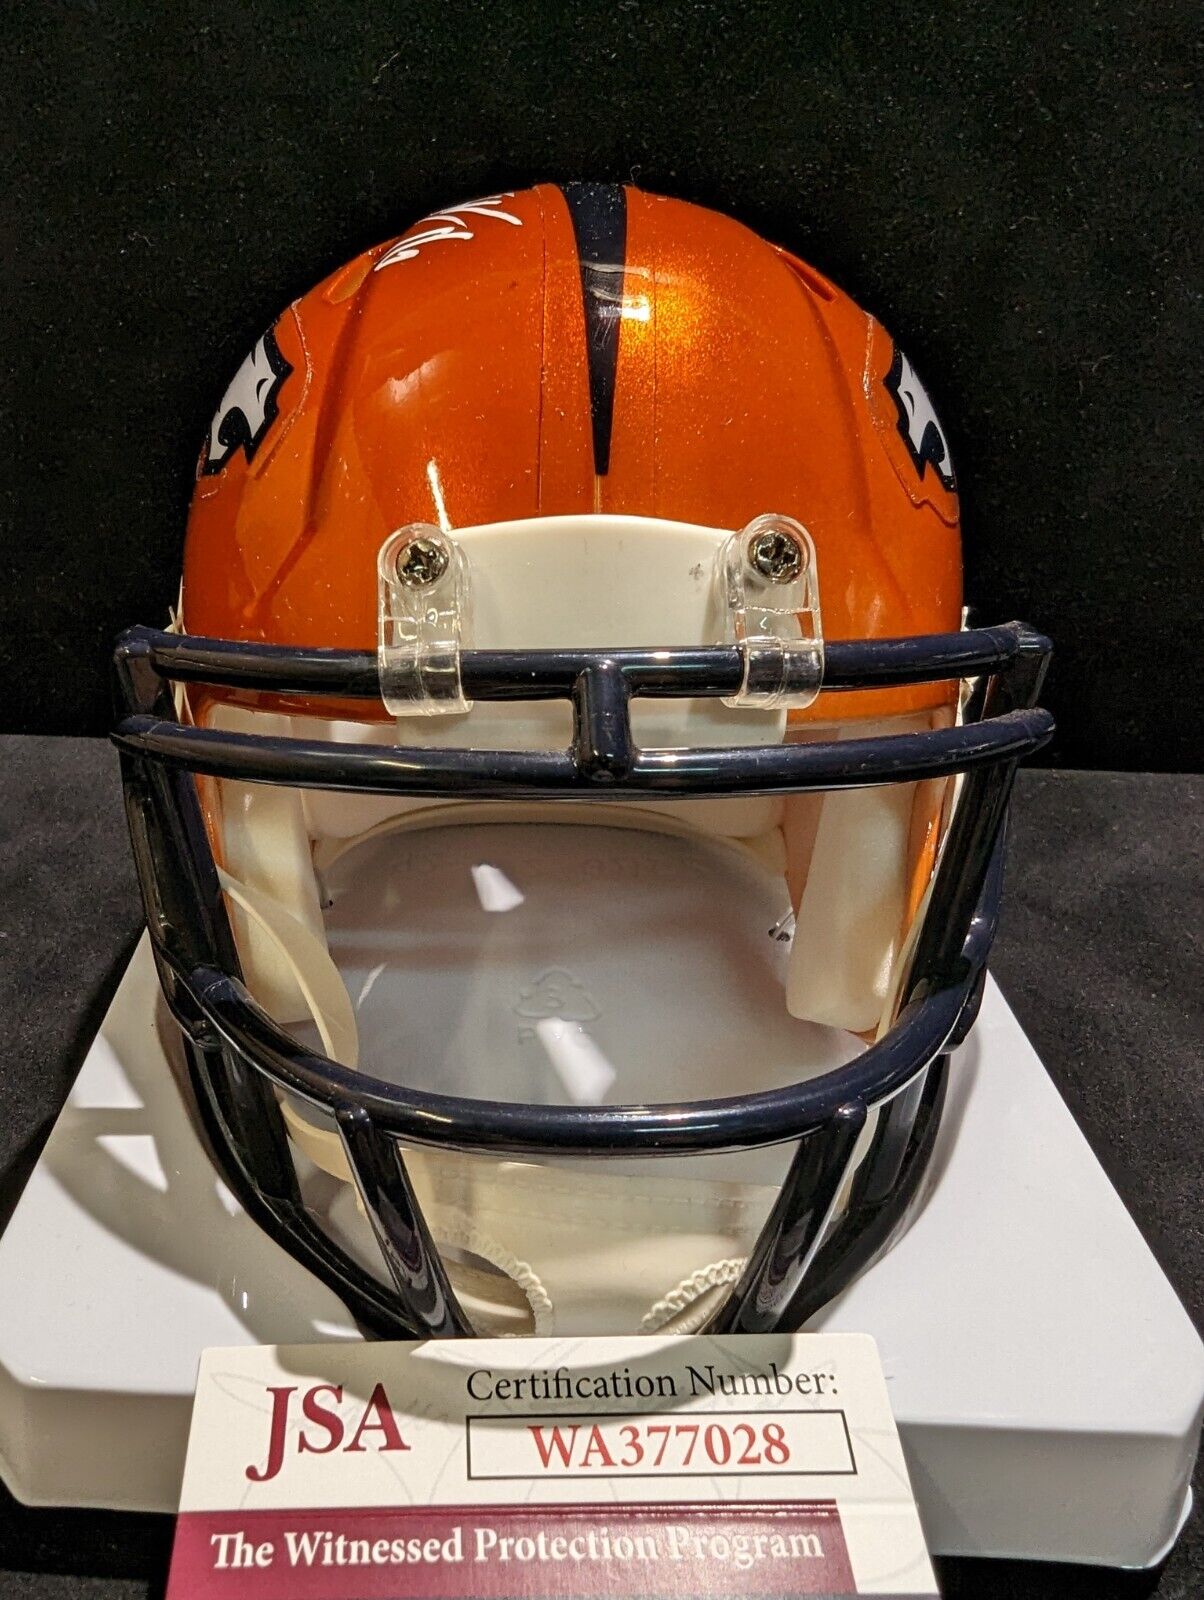 MVP Authentics Denver Broncos Jake Plummer Autographed Flash Mini Helmet Jsa Coa 90 sports jersey framing , jersey framing